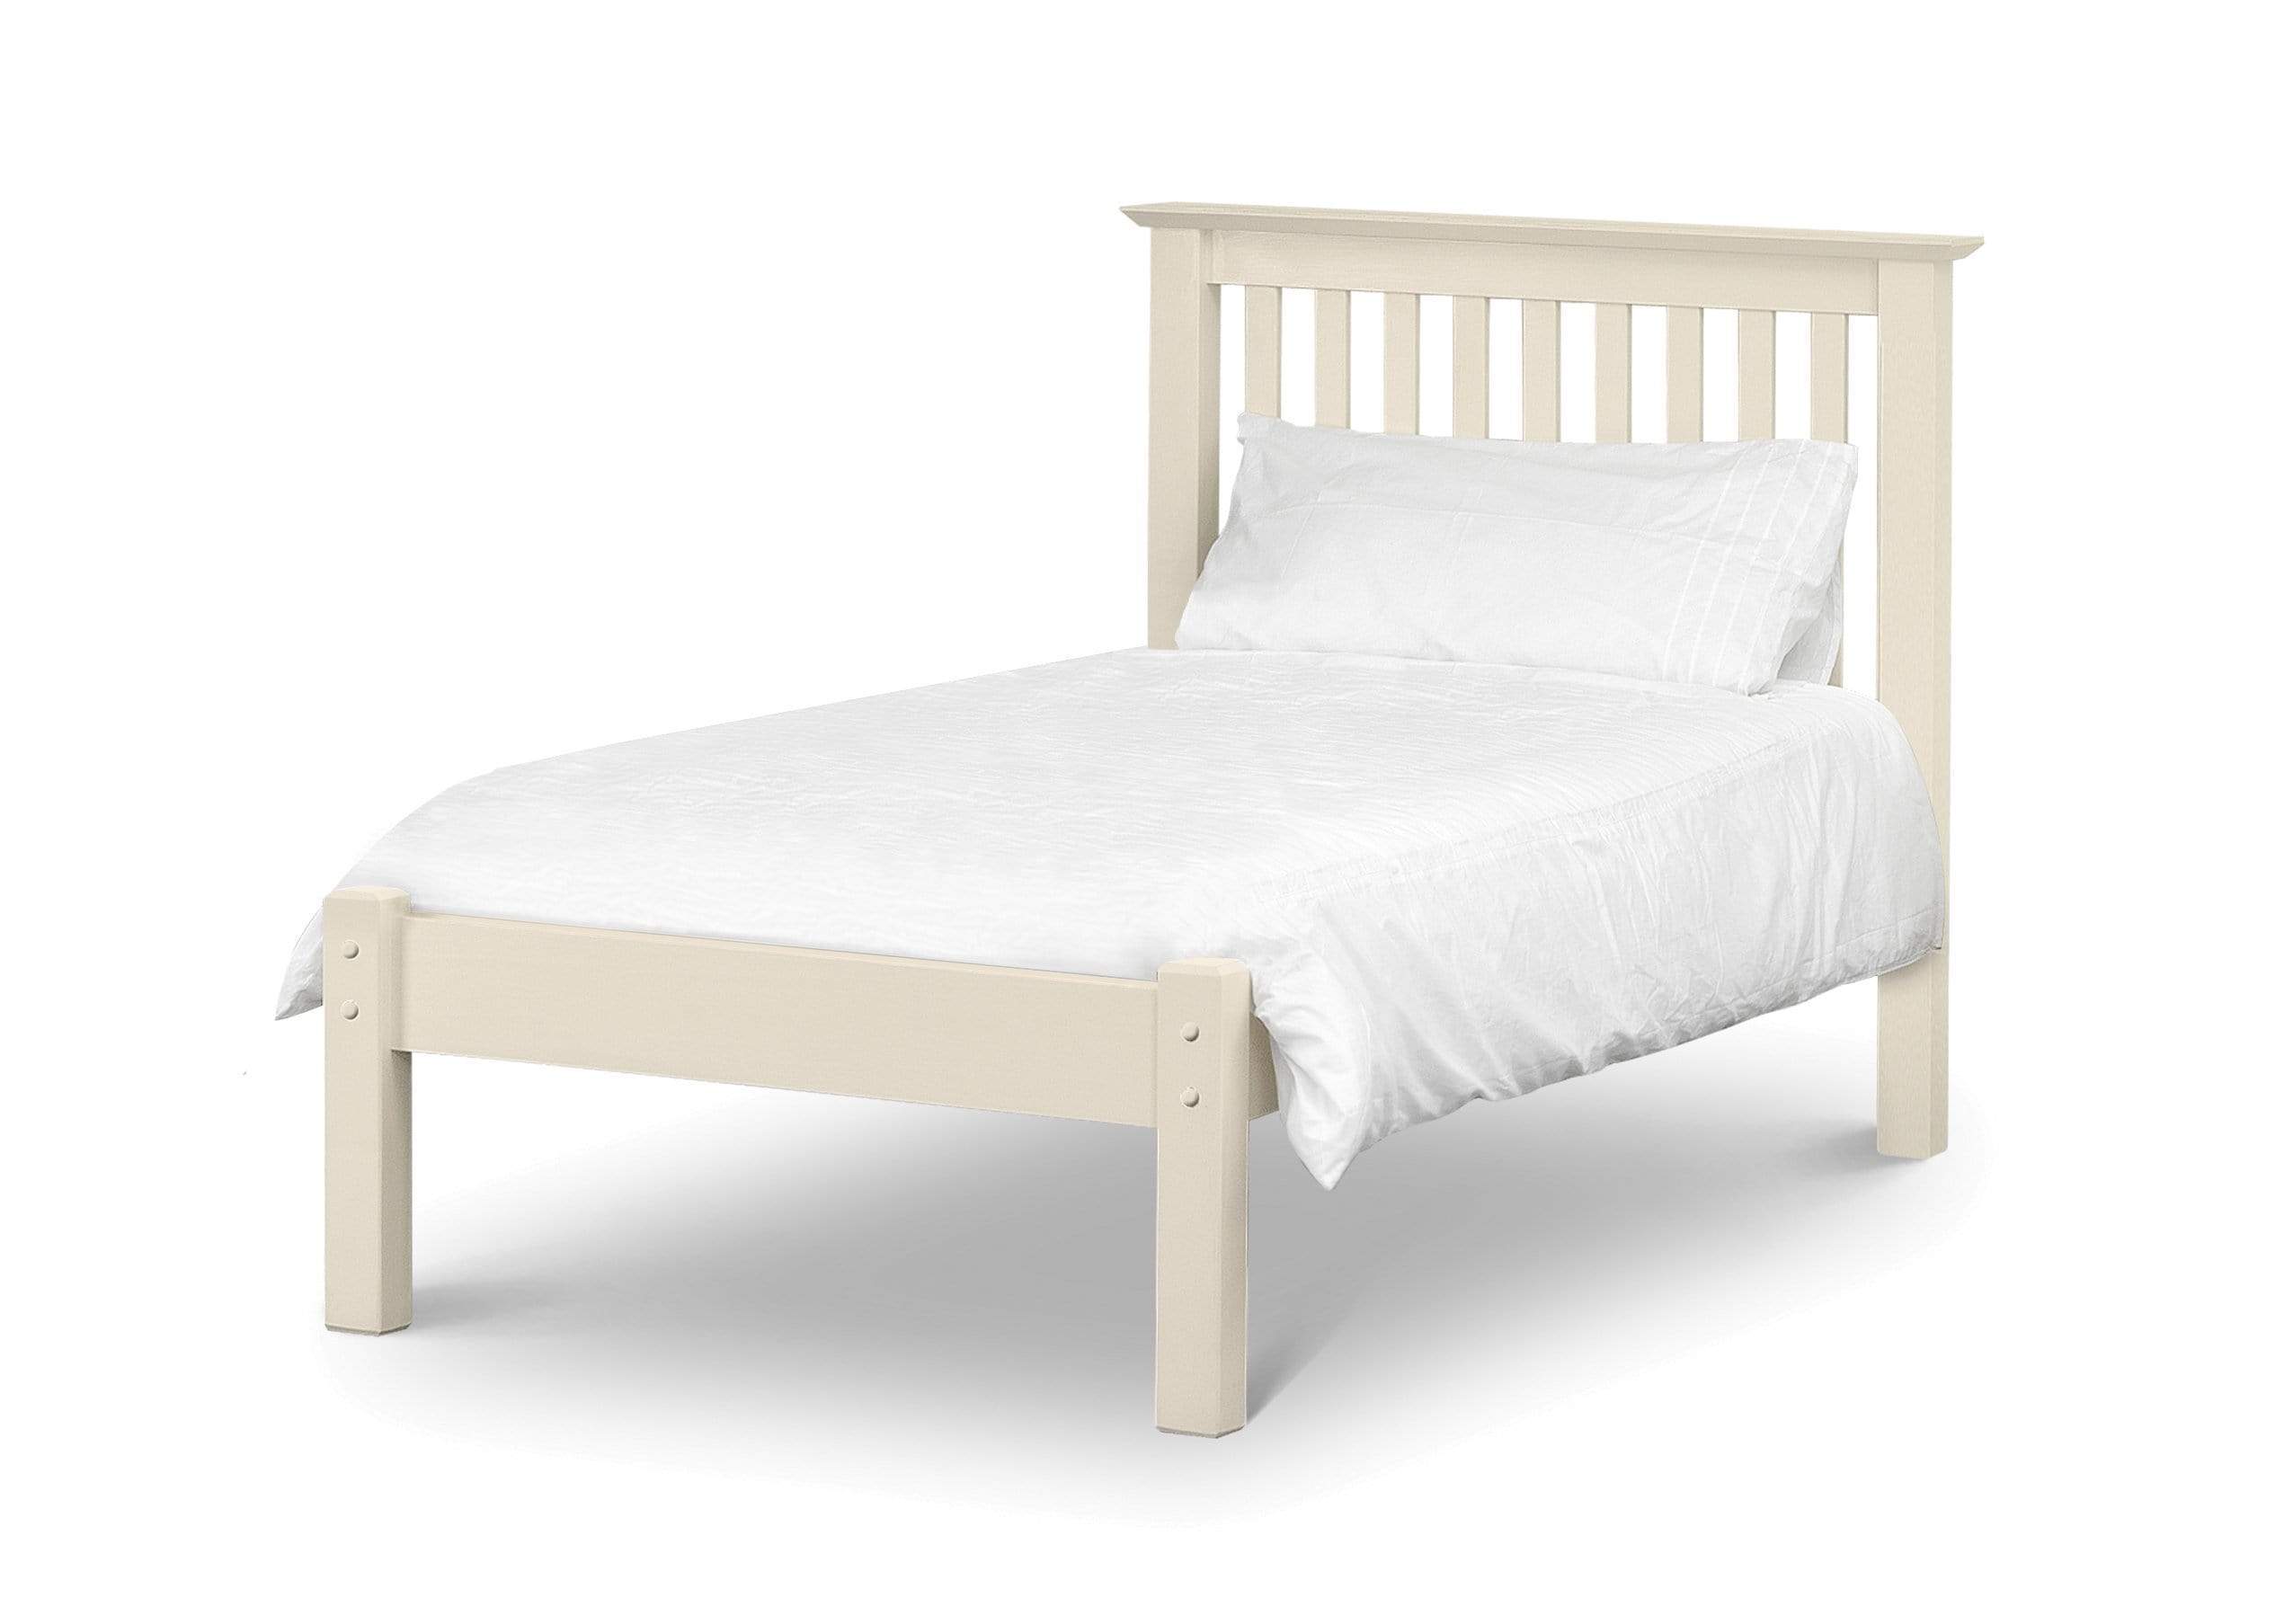 Julian Bowen Wood Bed Barcelona Bed Lfe White - Wood - Stone White Bed Kings